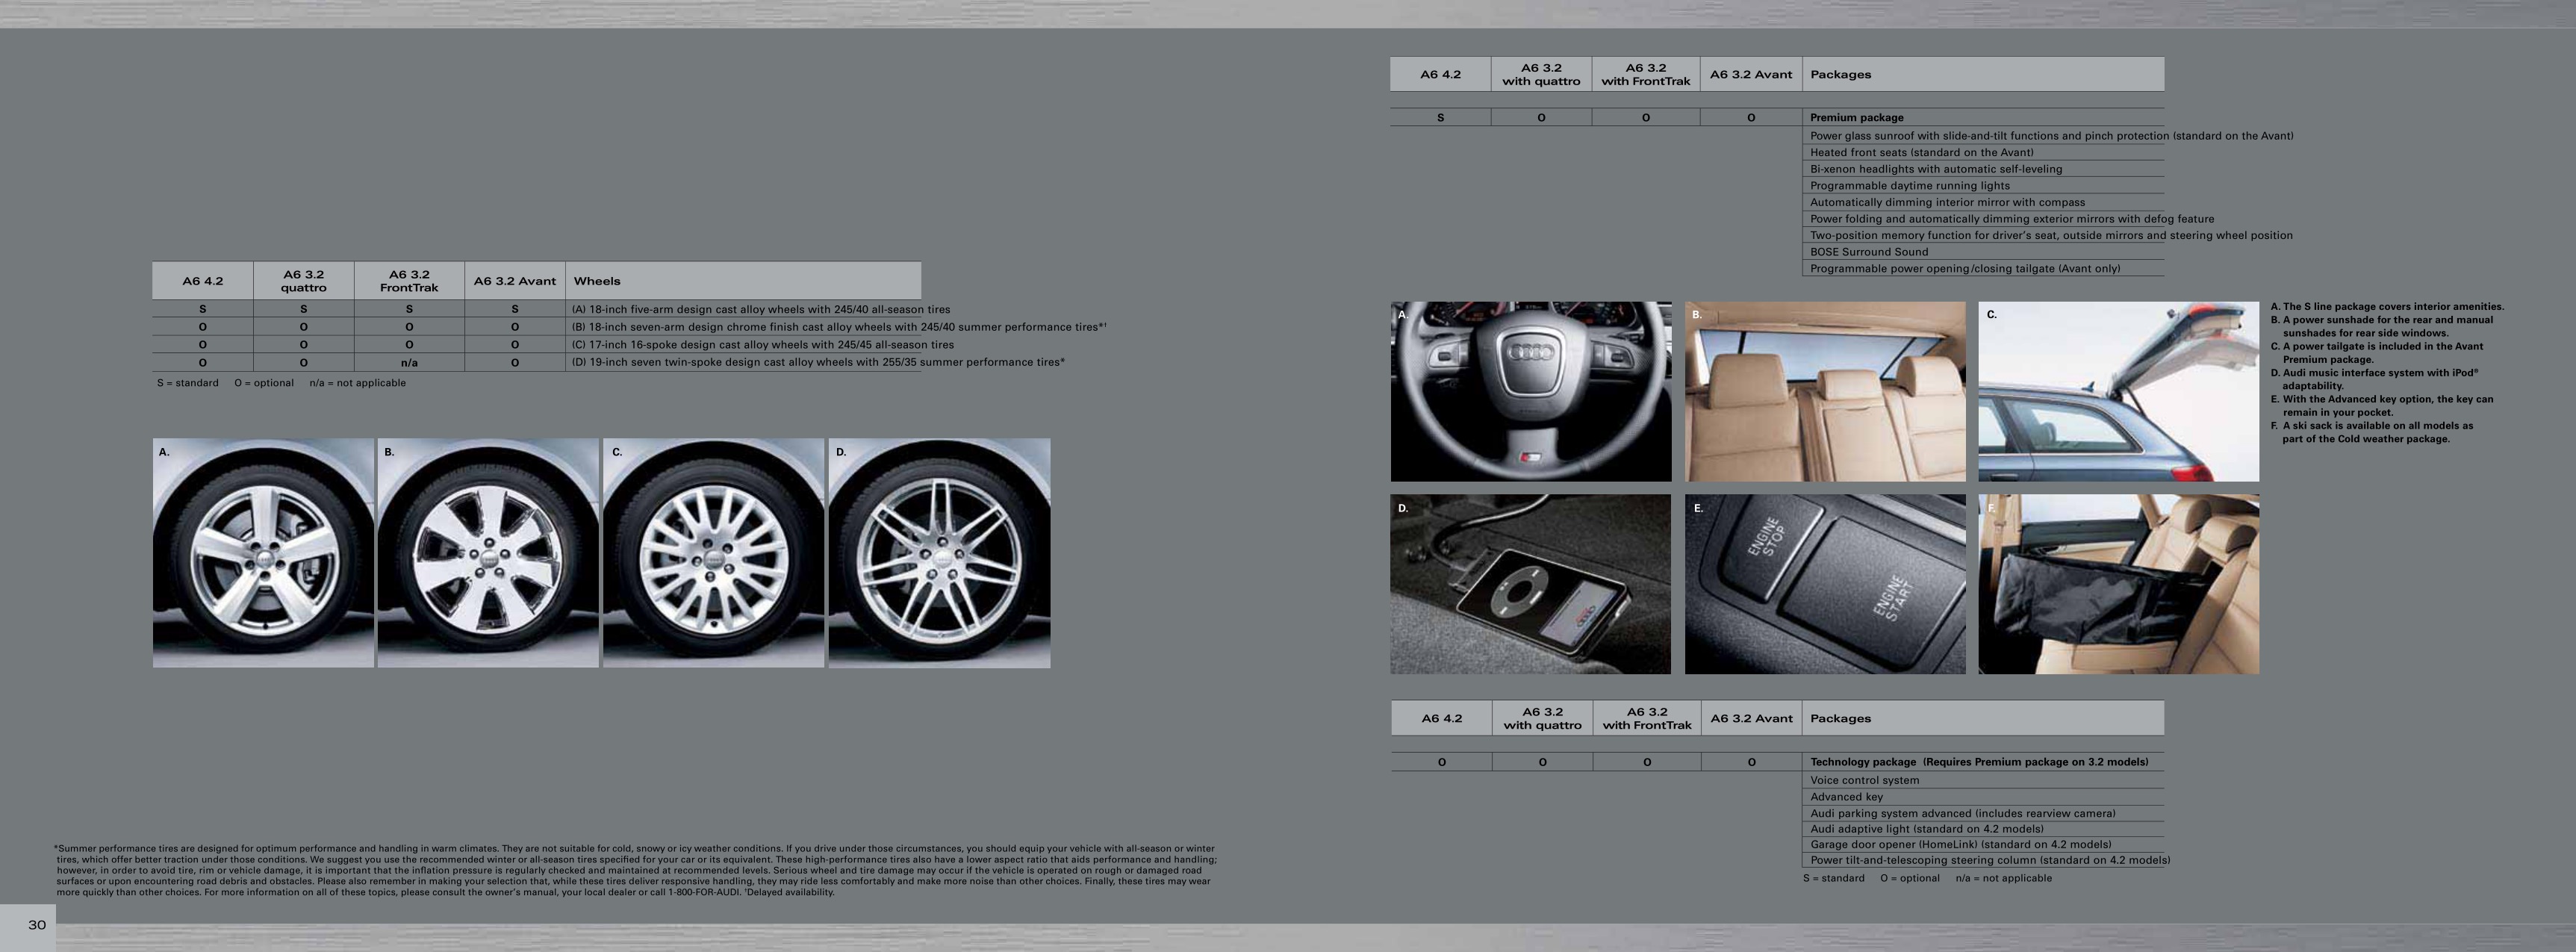 2008 Audi A6 Brochure Page 15